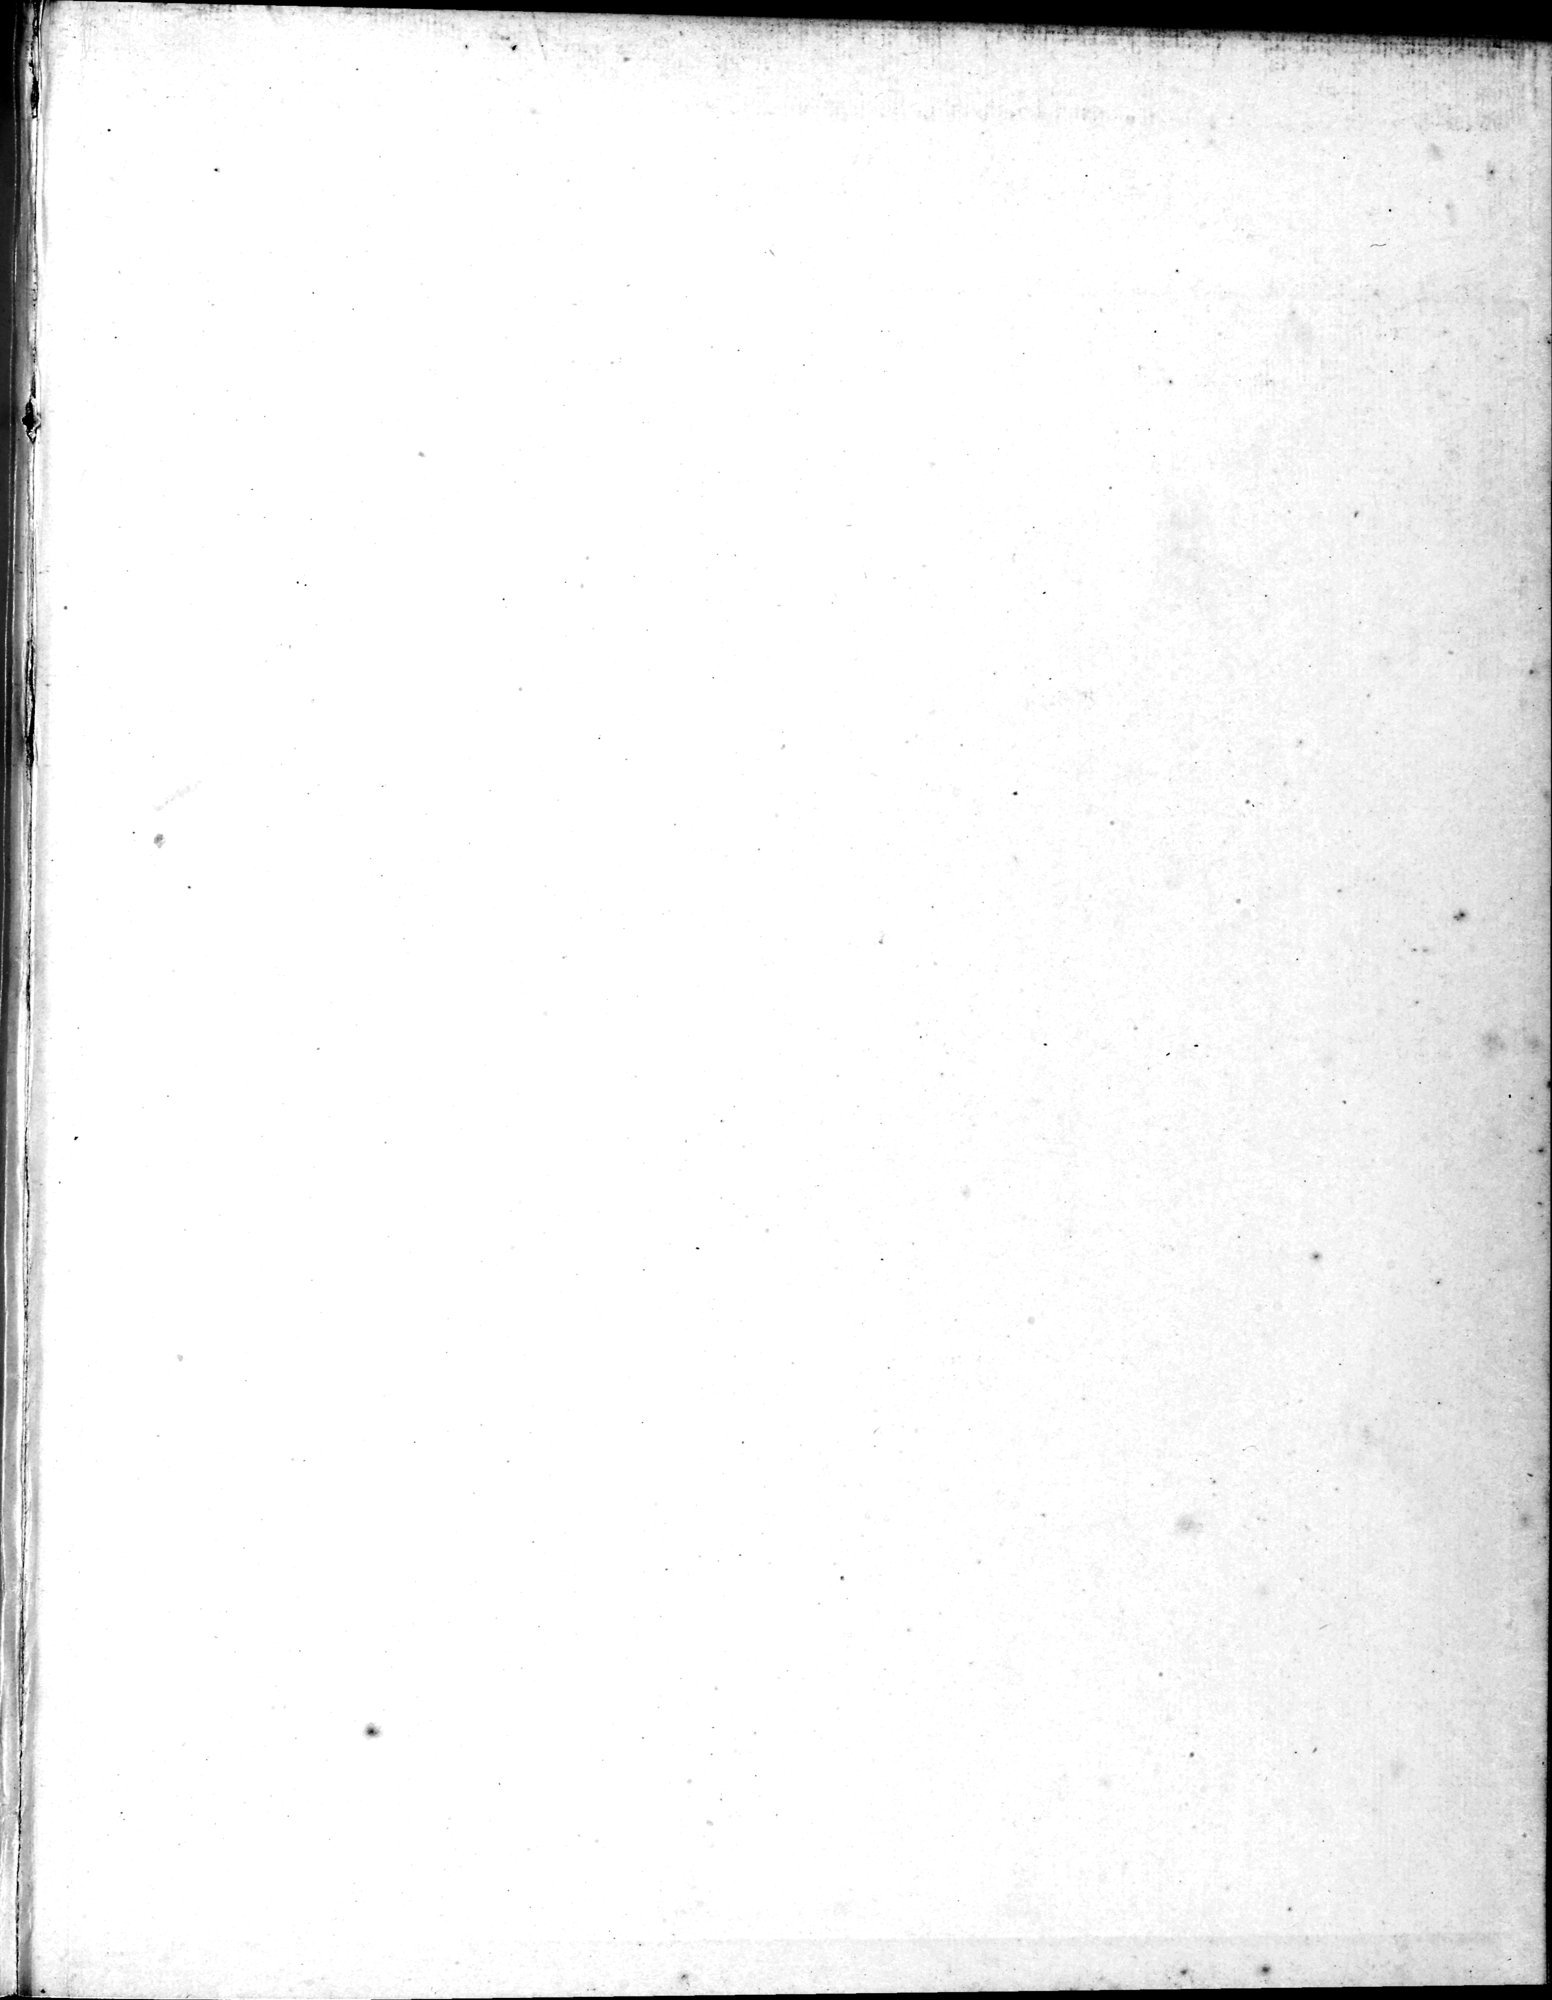 Mongoliia i Kam : vol.5 / Page 345 (Grayscale High Resolution Image)